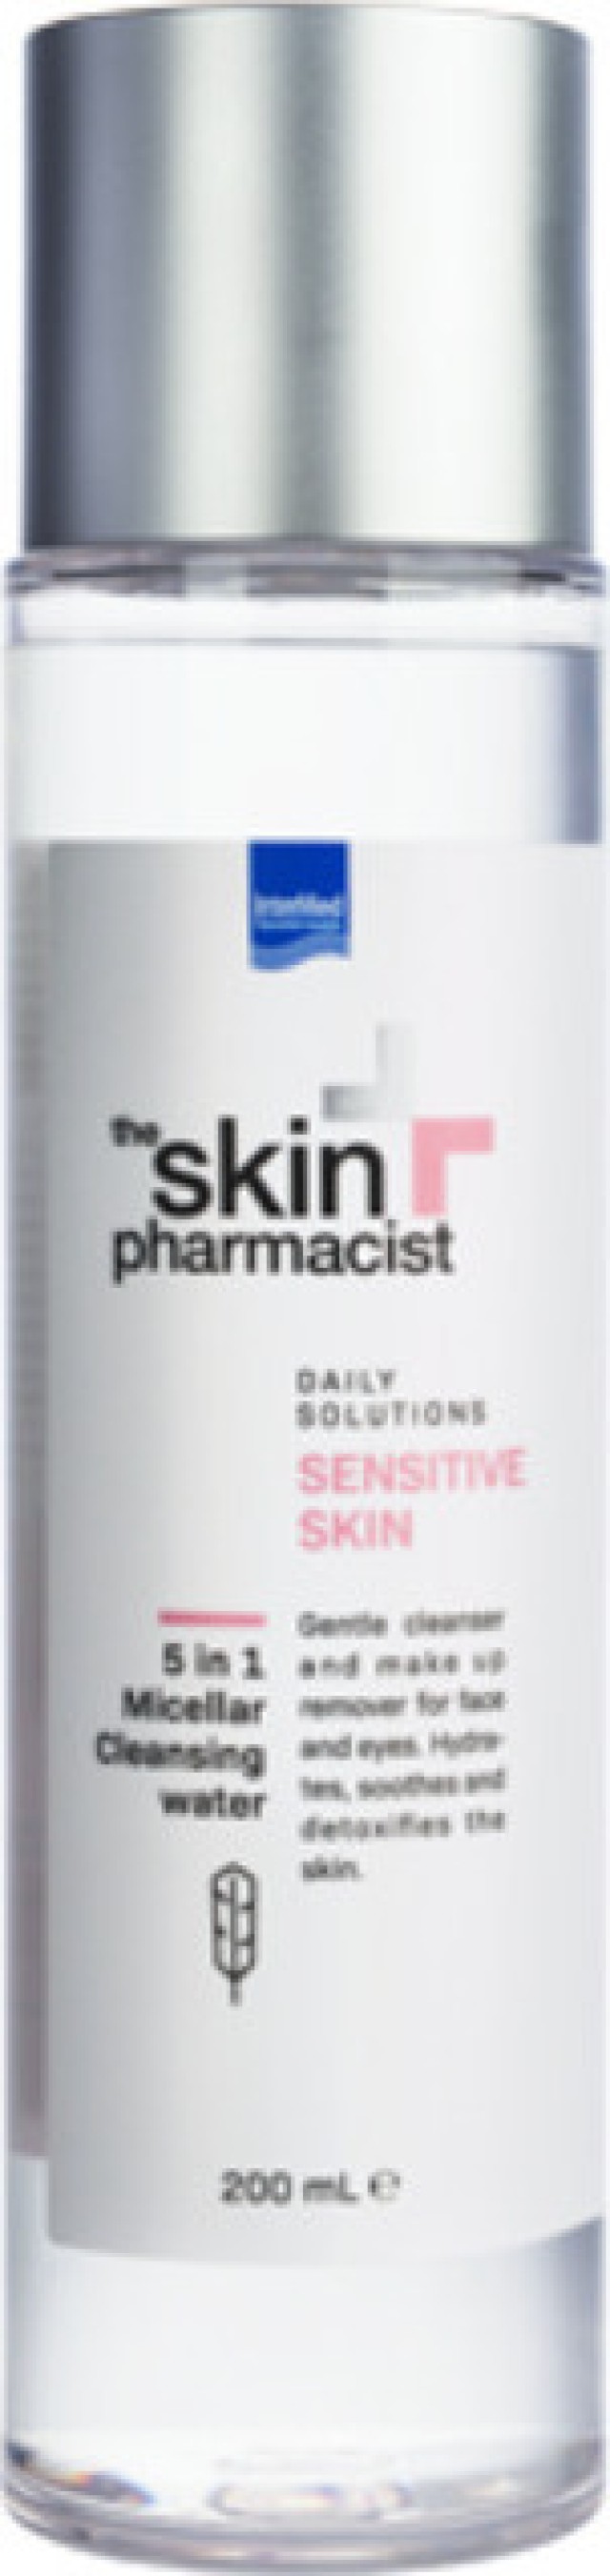 Intermed The Skin Pharmacist Sensitive Skin 5in1 Micellar Cleansing Water Μικυλλιακό Νερό Καθαρισμού Για Πρόσωπο & Μάτια 200ml